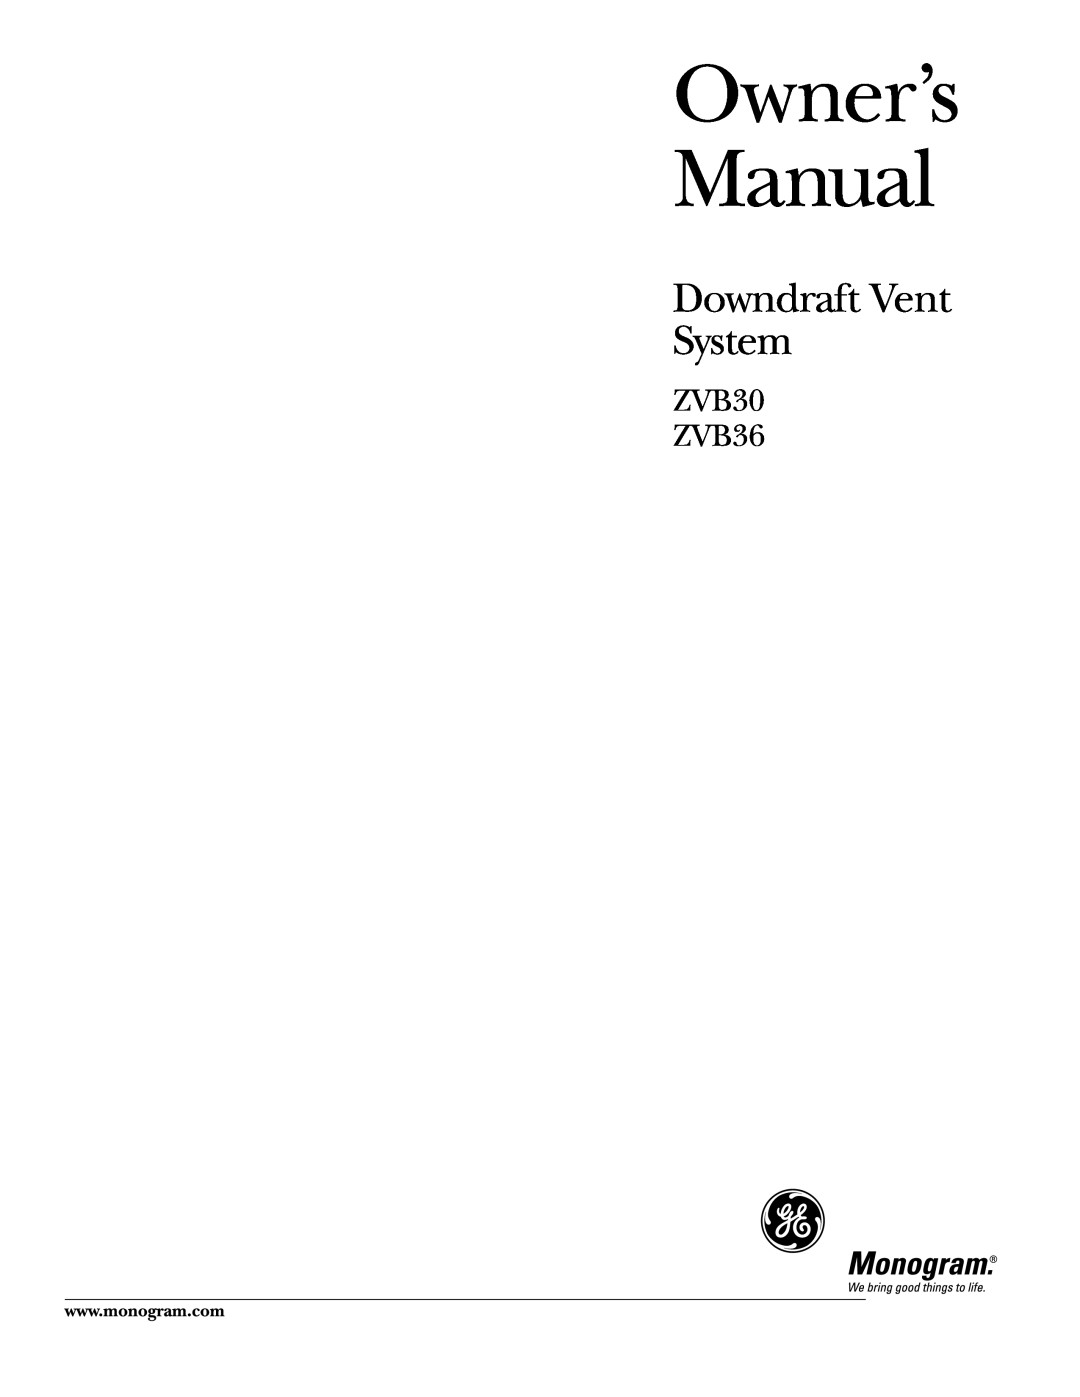 GE owner manual Owner’s Manual, Downdraft Vent System, ZVB30 ZVB36 